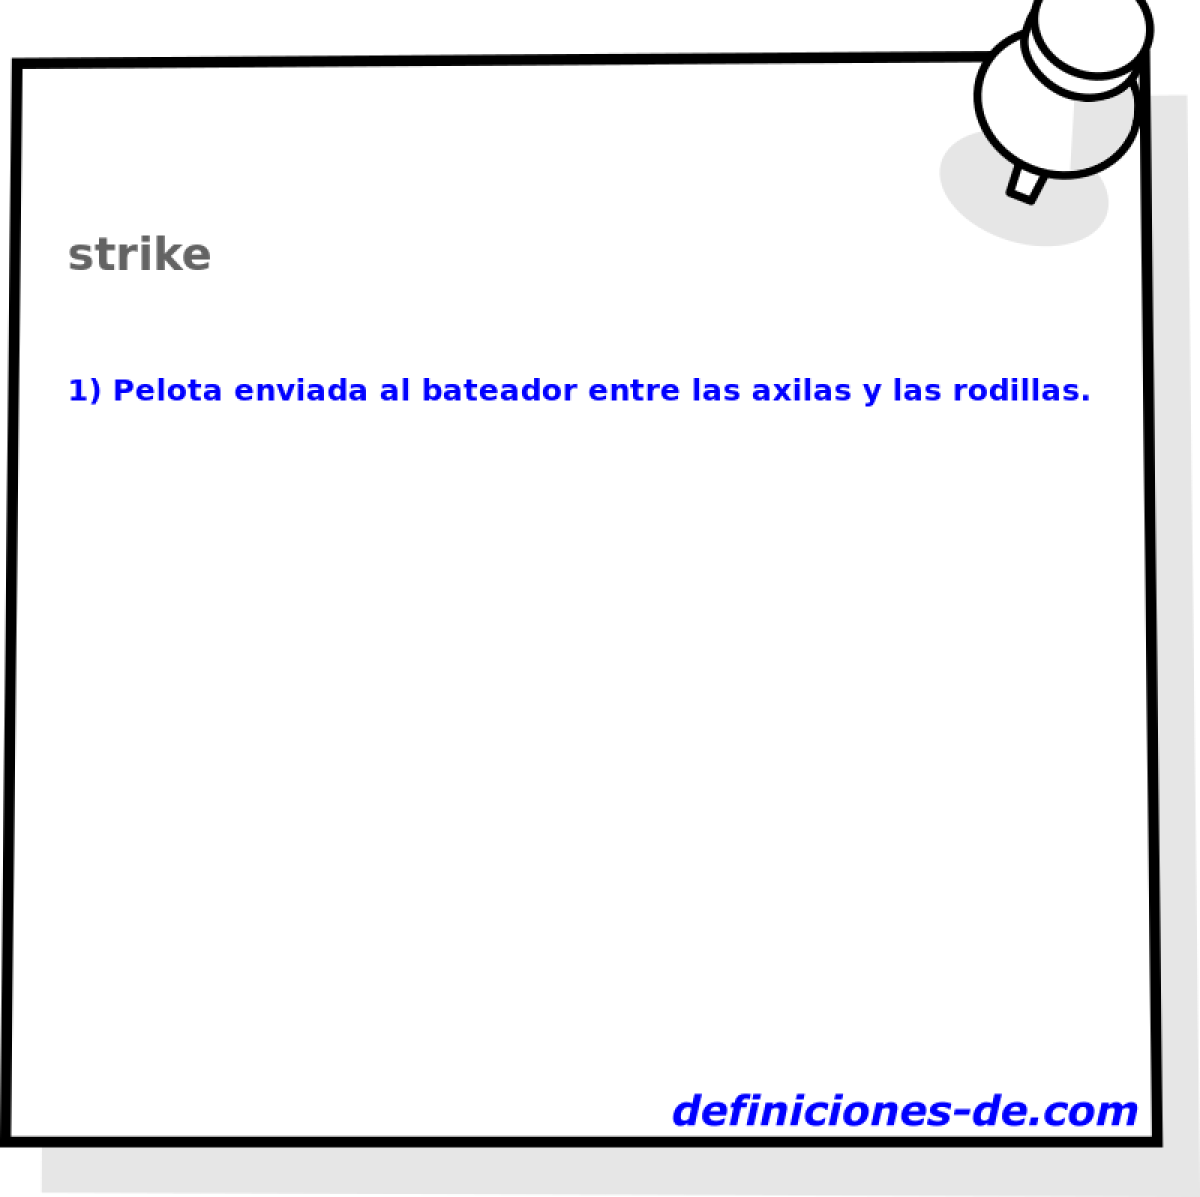 strike 